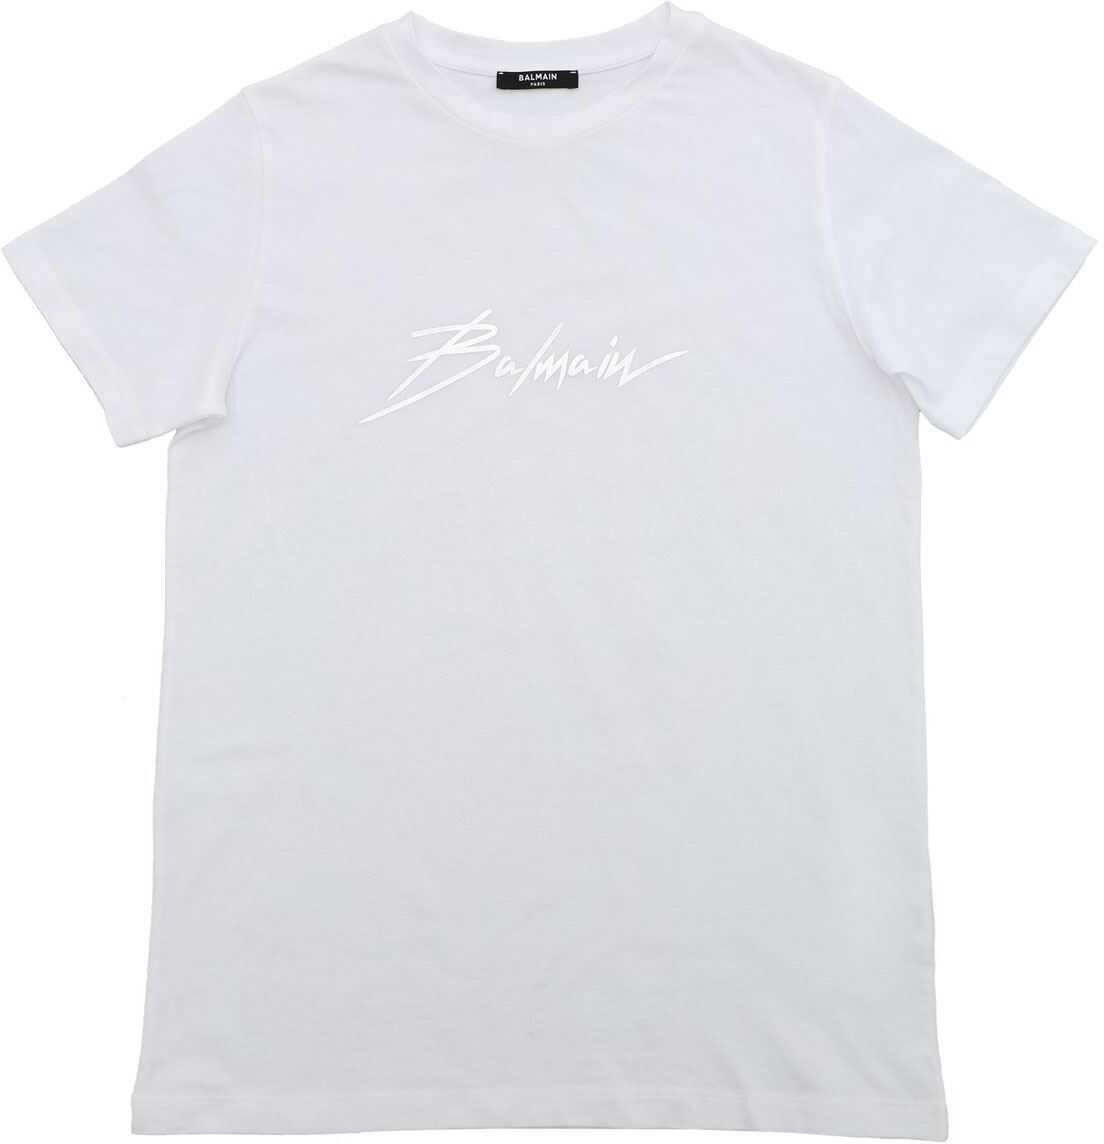 Balmain Silver Logo T-Shirt In White 6M8741 MX030 100AO White